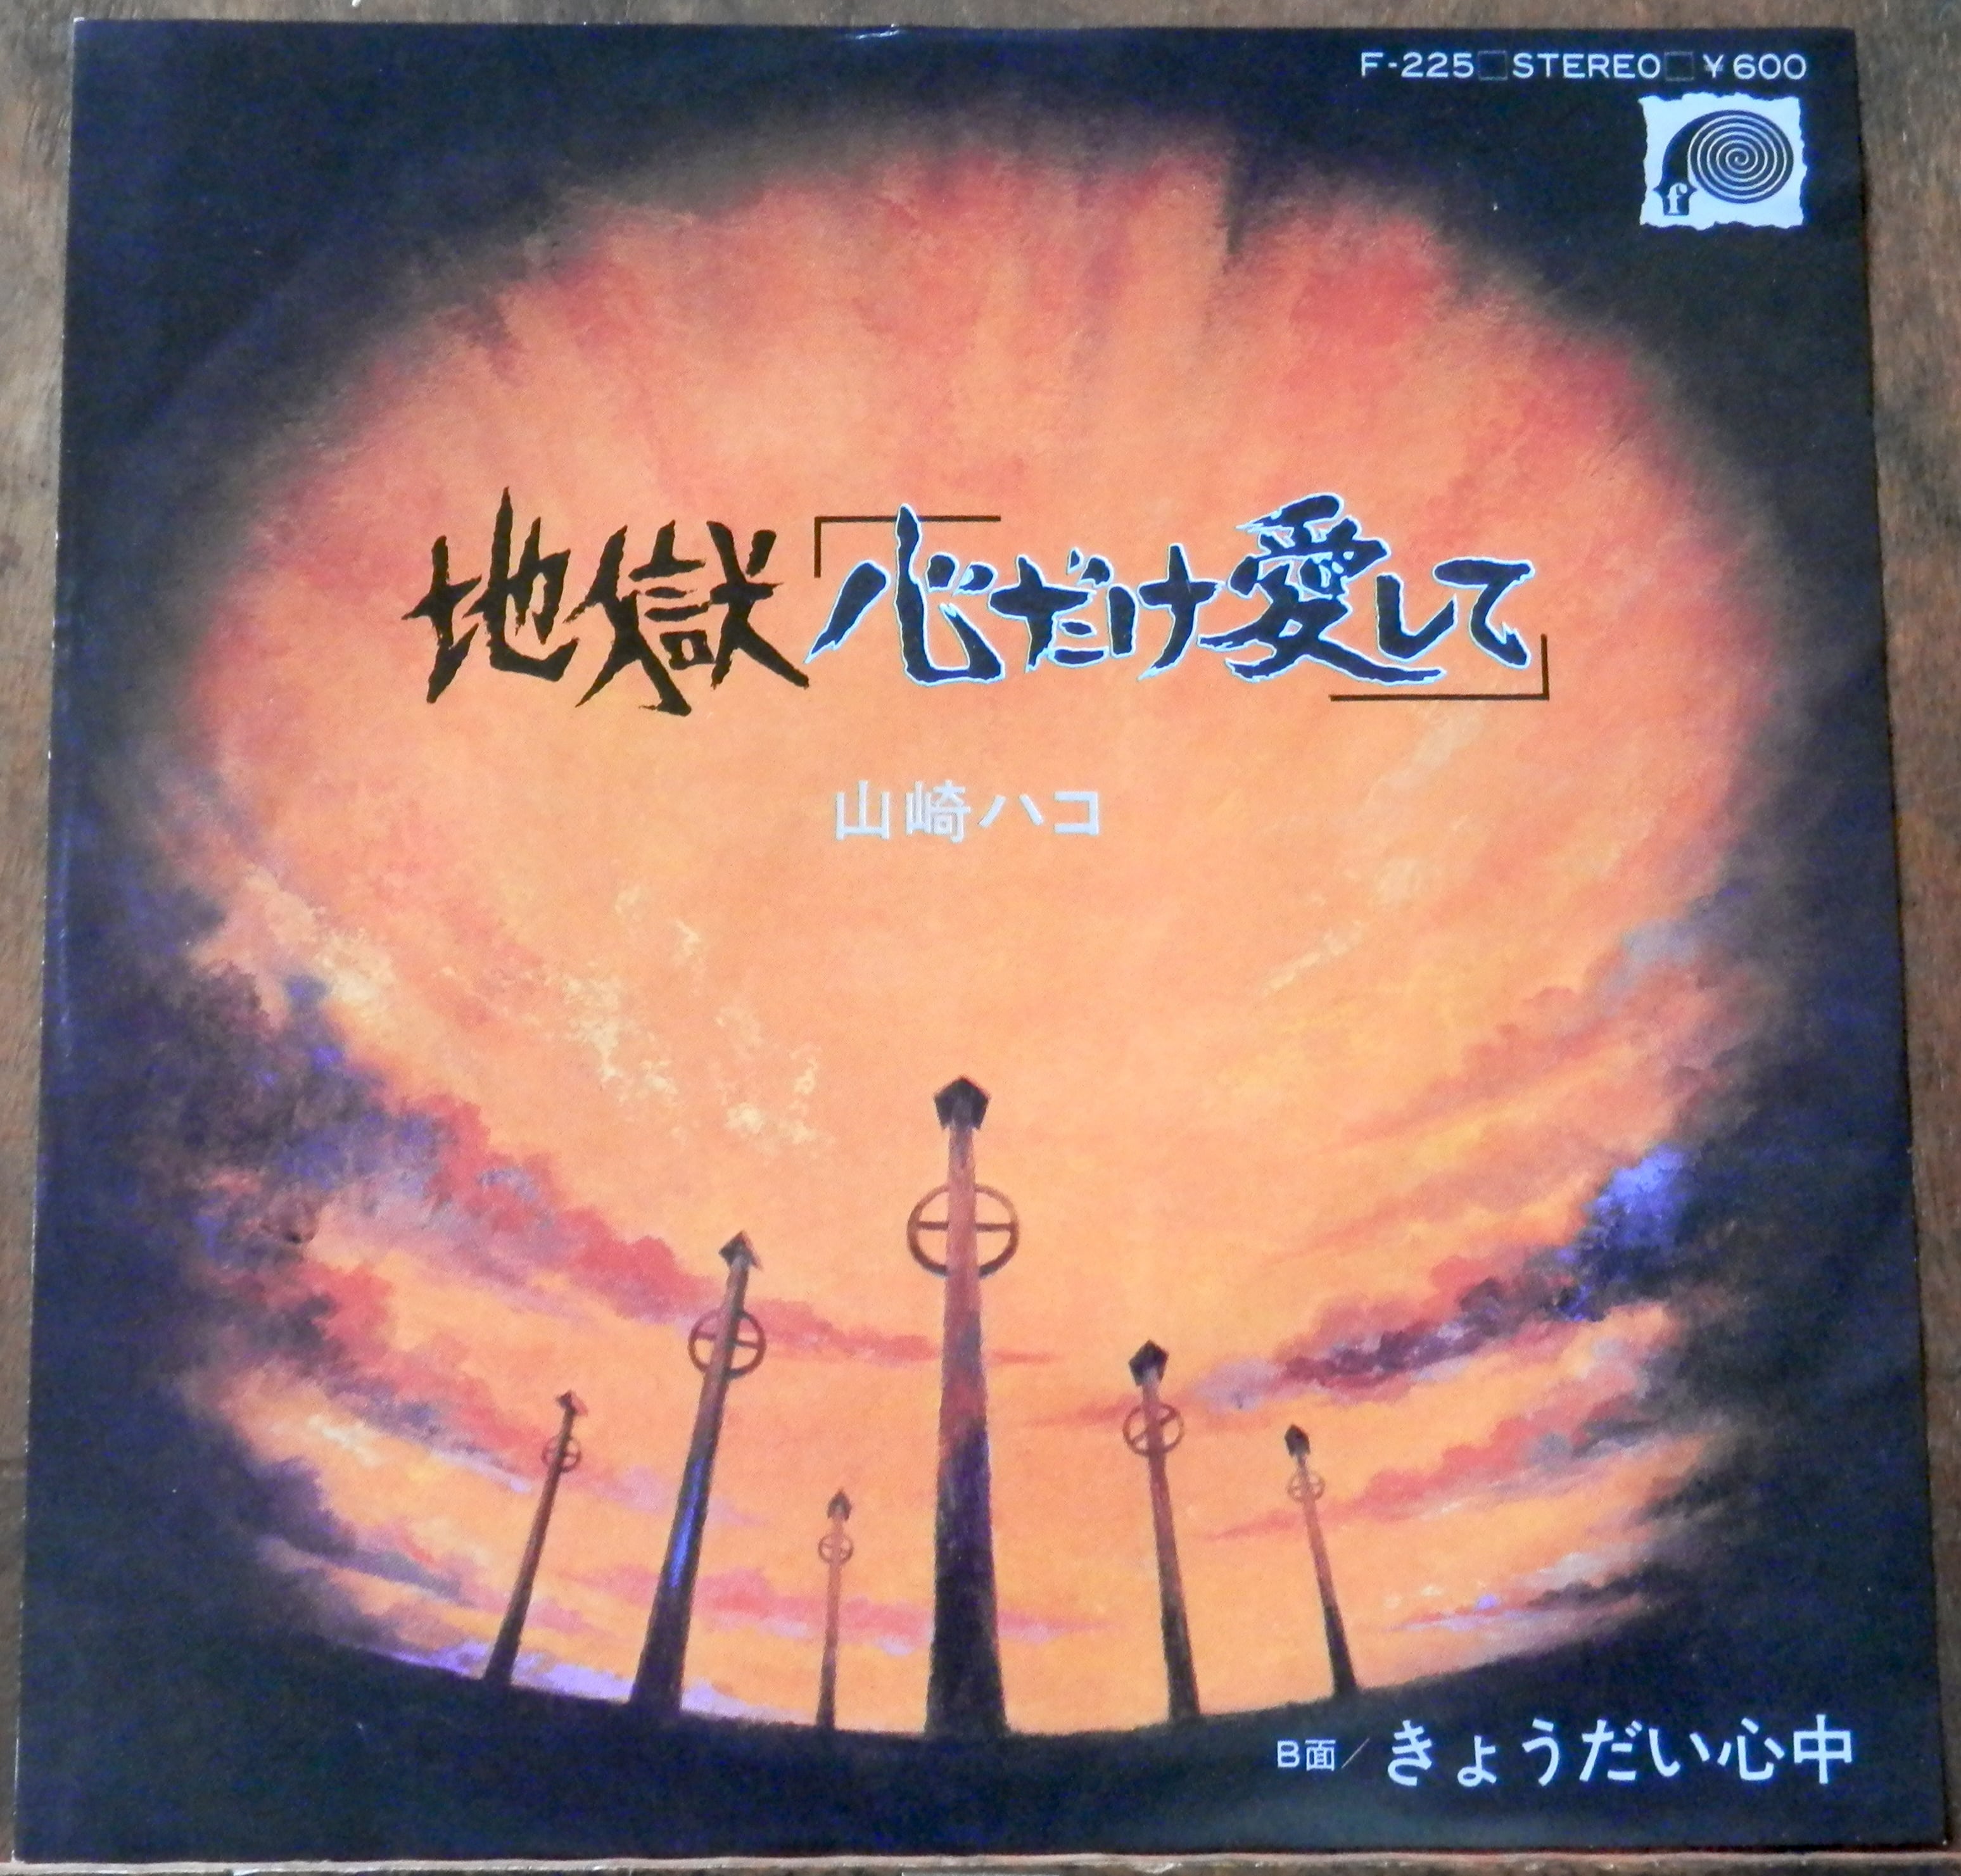 79【EP】山崎ハコ - 地獄「心だけ愛して」きょうだい心中*放送禁止唄